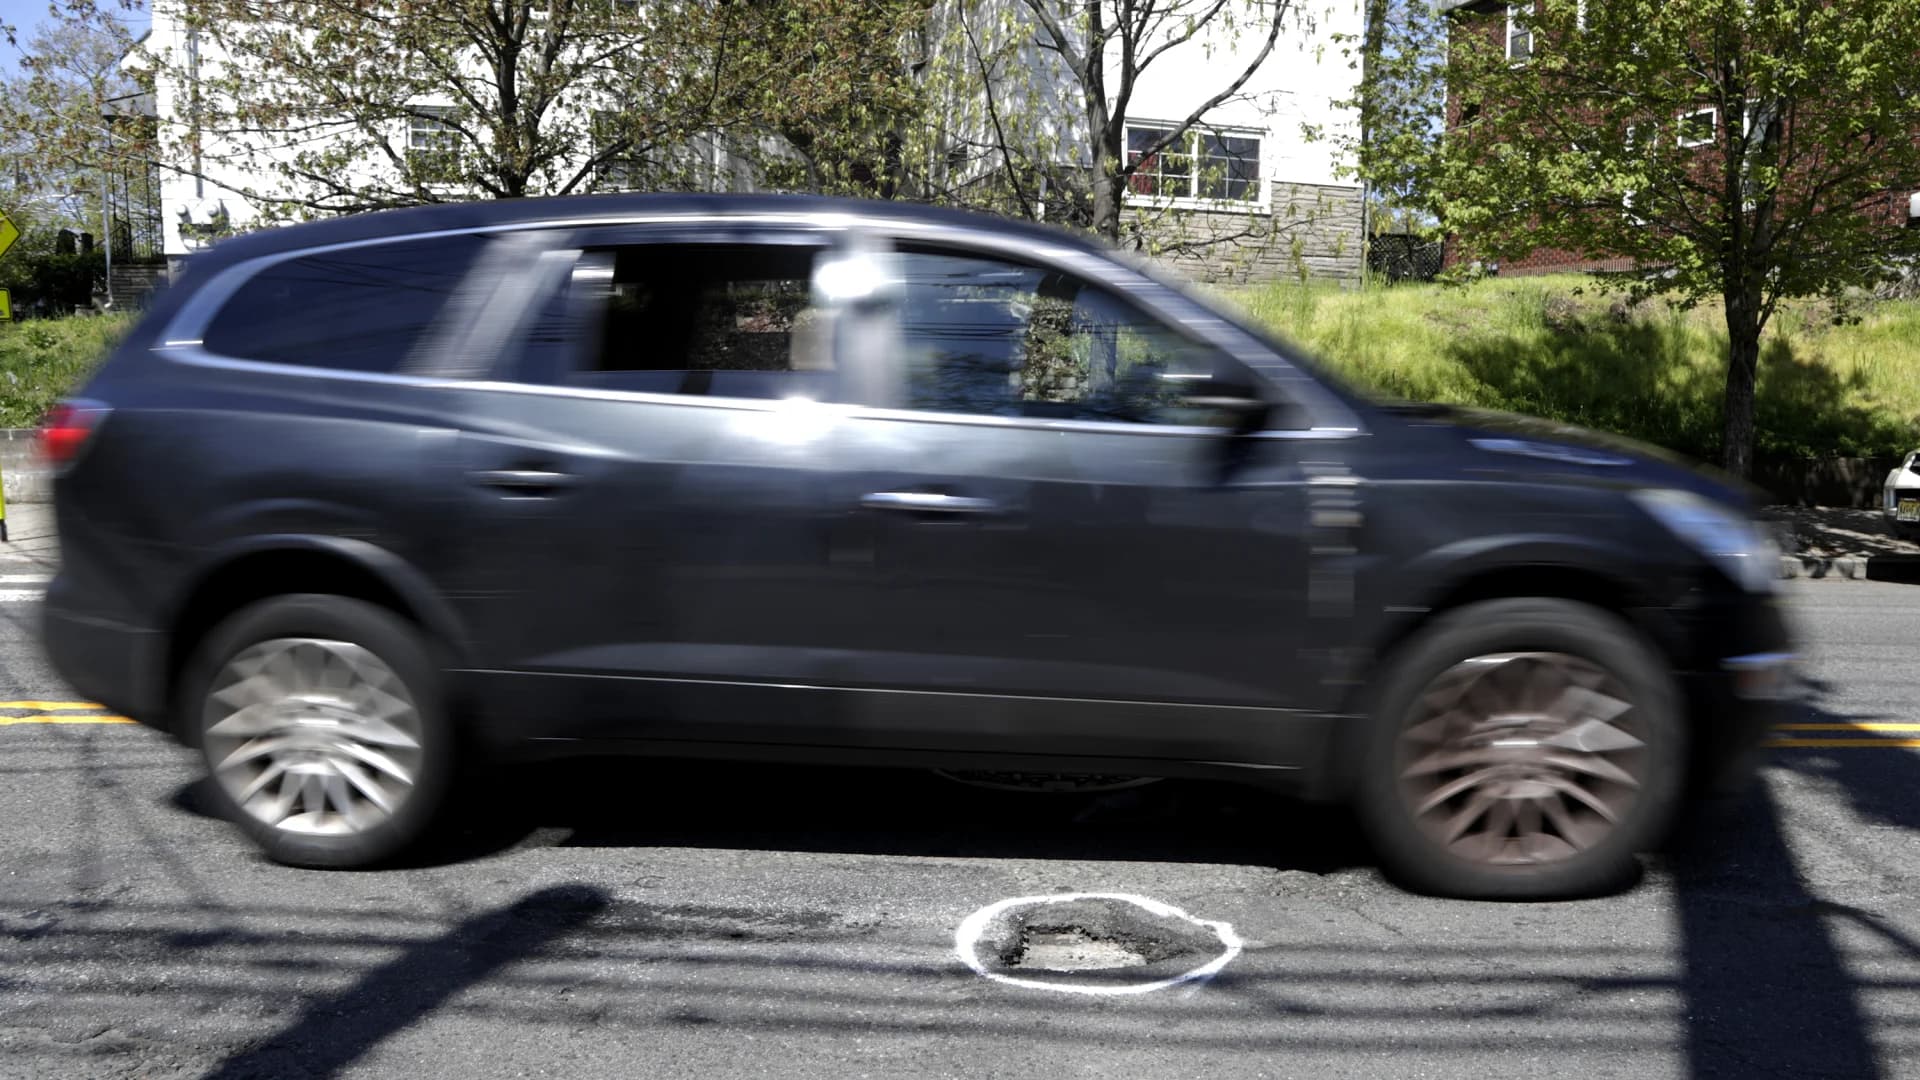 Guide: Tips for avoiding car damage from potholes